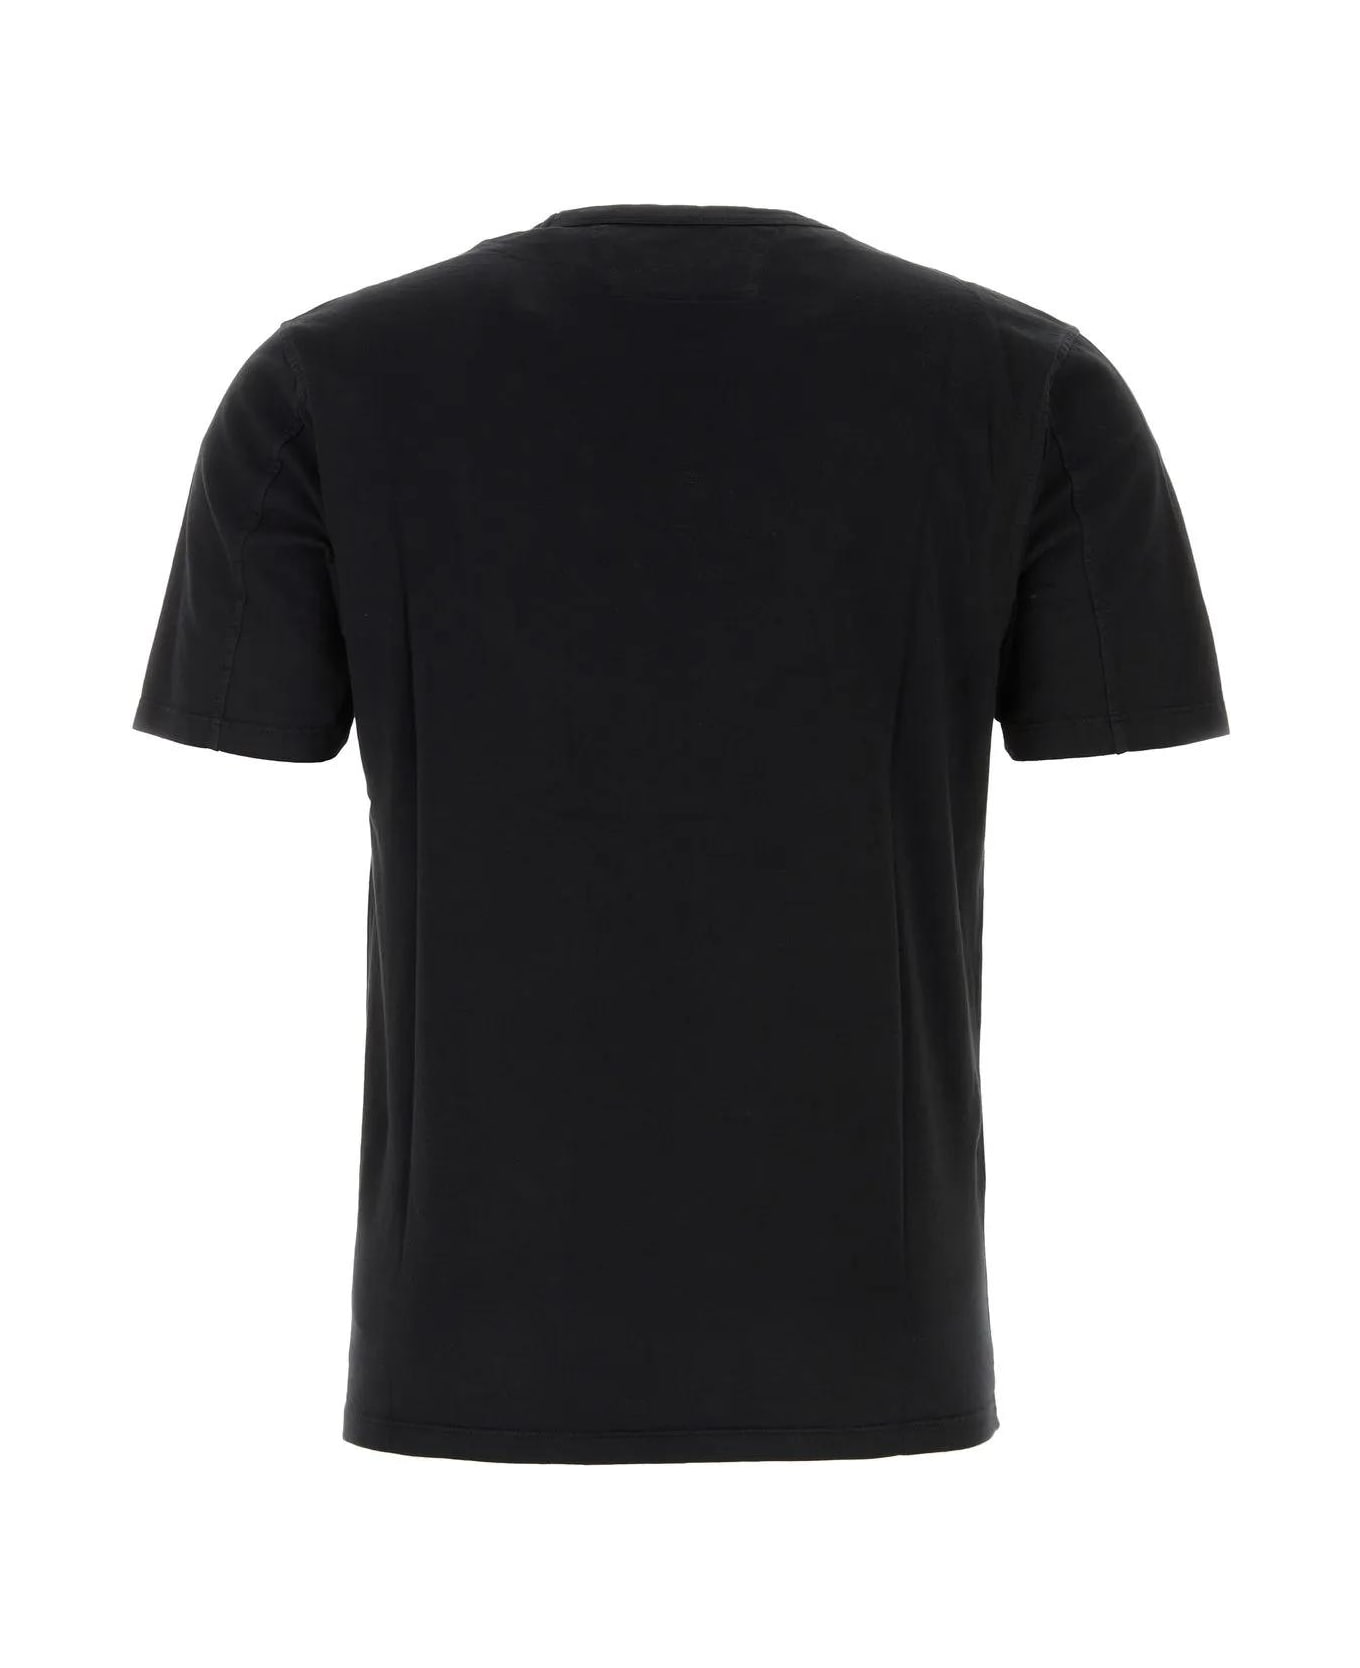 C.P. Company Black Cotton T-shirt - Nero